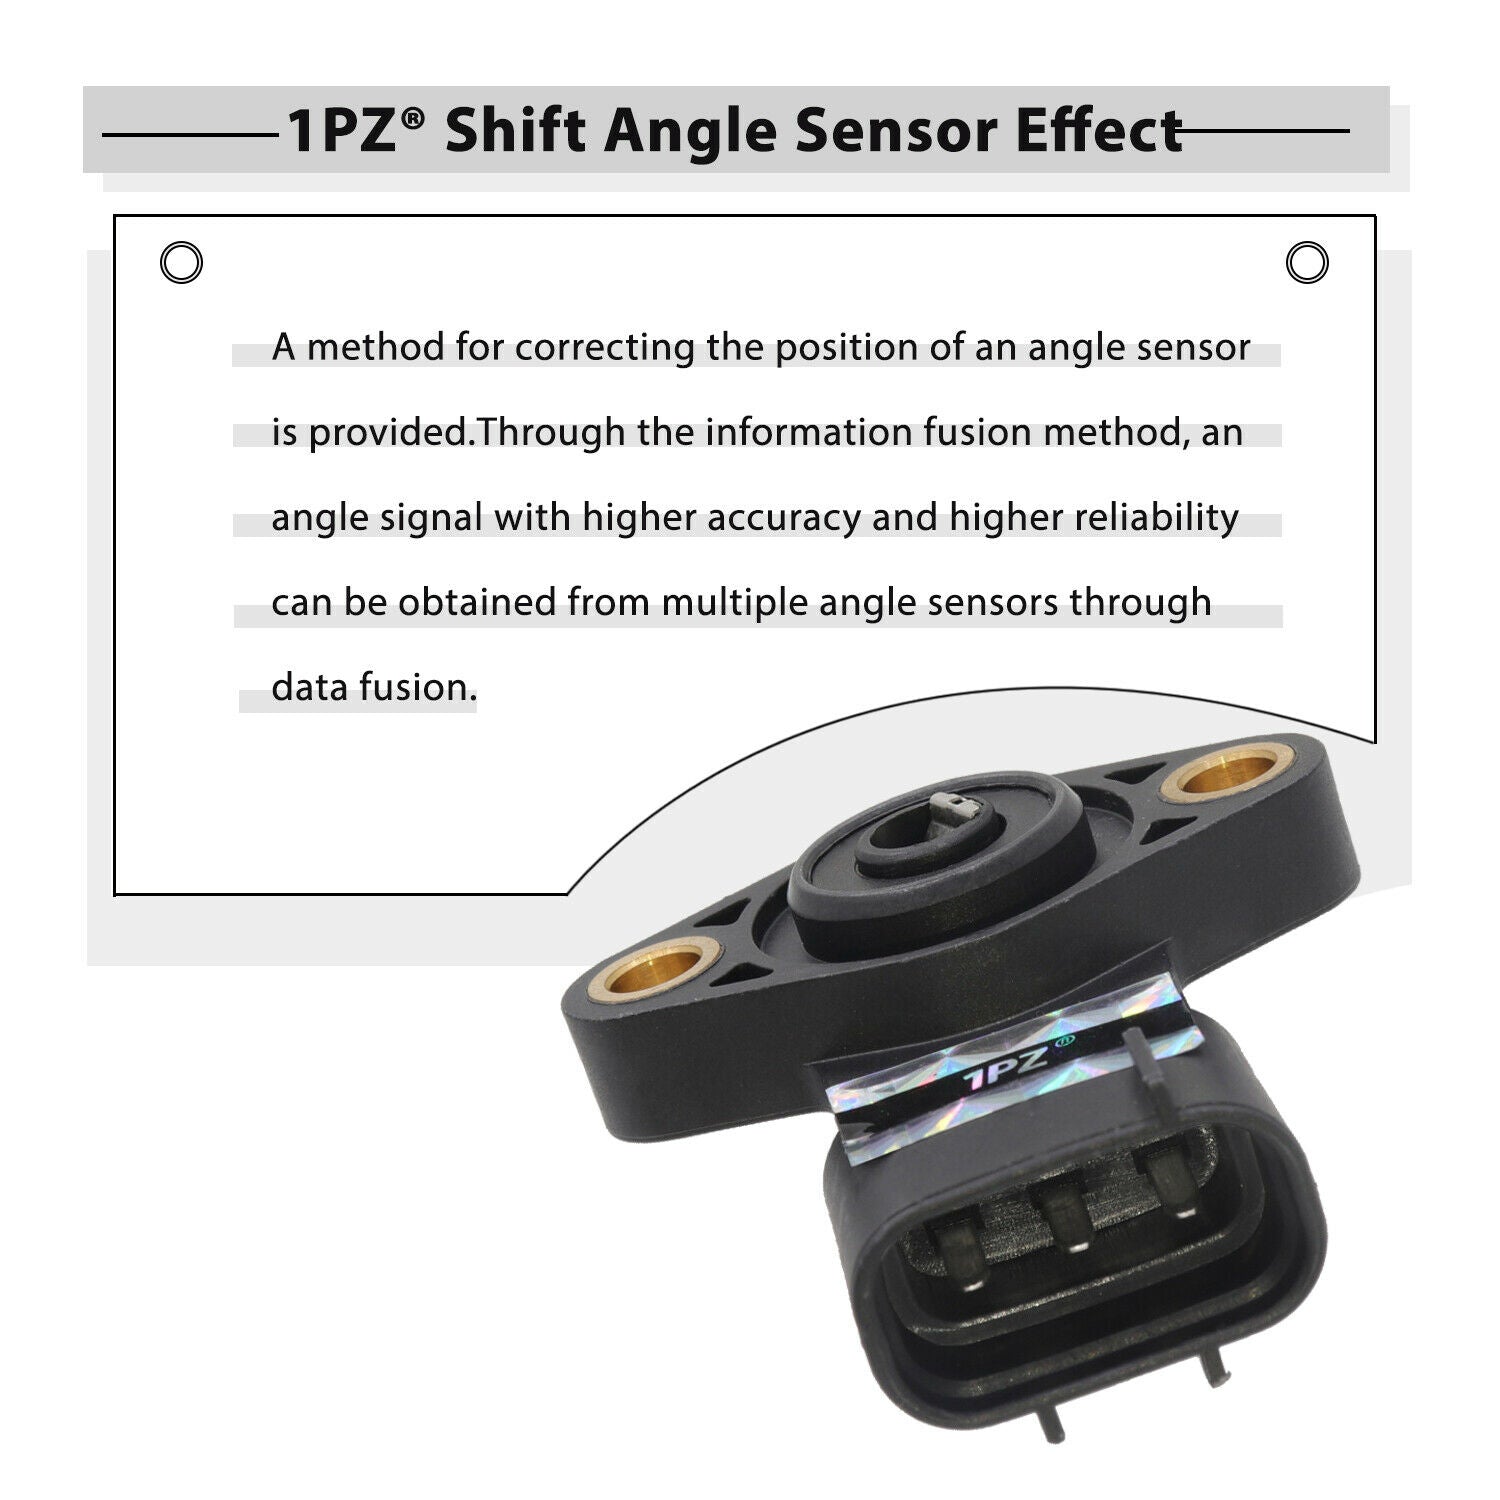 1PZ Shift Angle Sensor Replacement for Honda Recon 250 Rancher 350 420 Foreman 500 Pioneer 1000 TRX250 TRX350 TRX420 TRX500 ATV